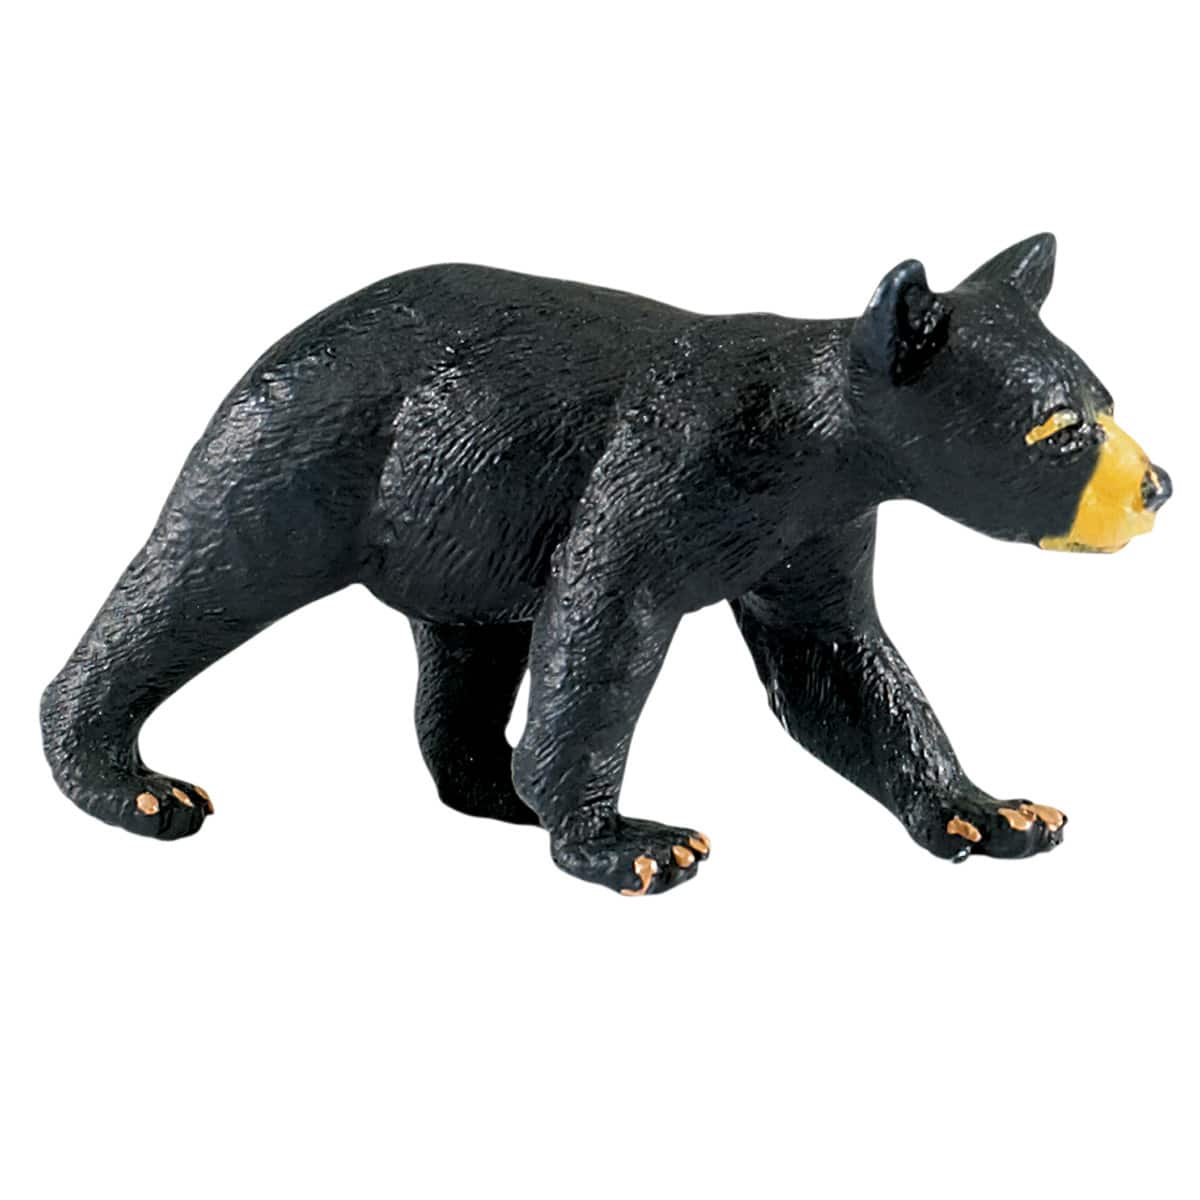 safari ltd black bear